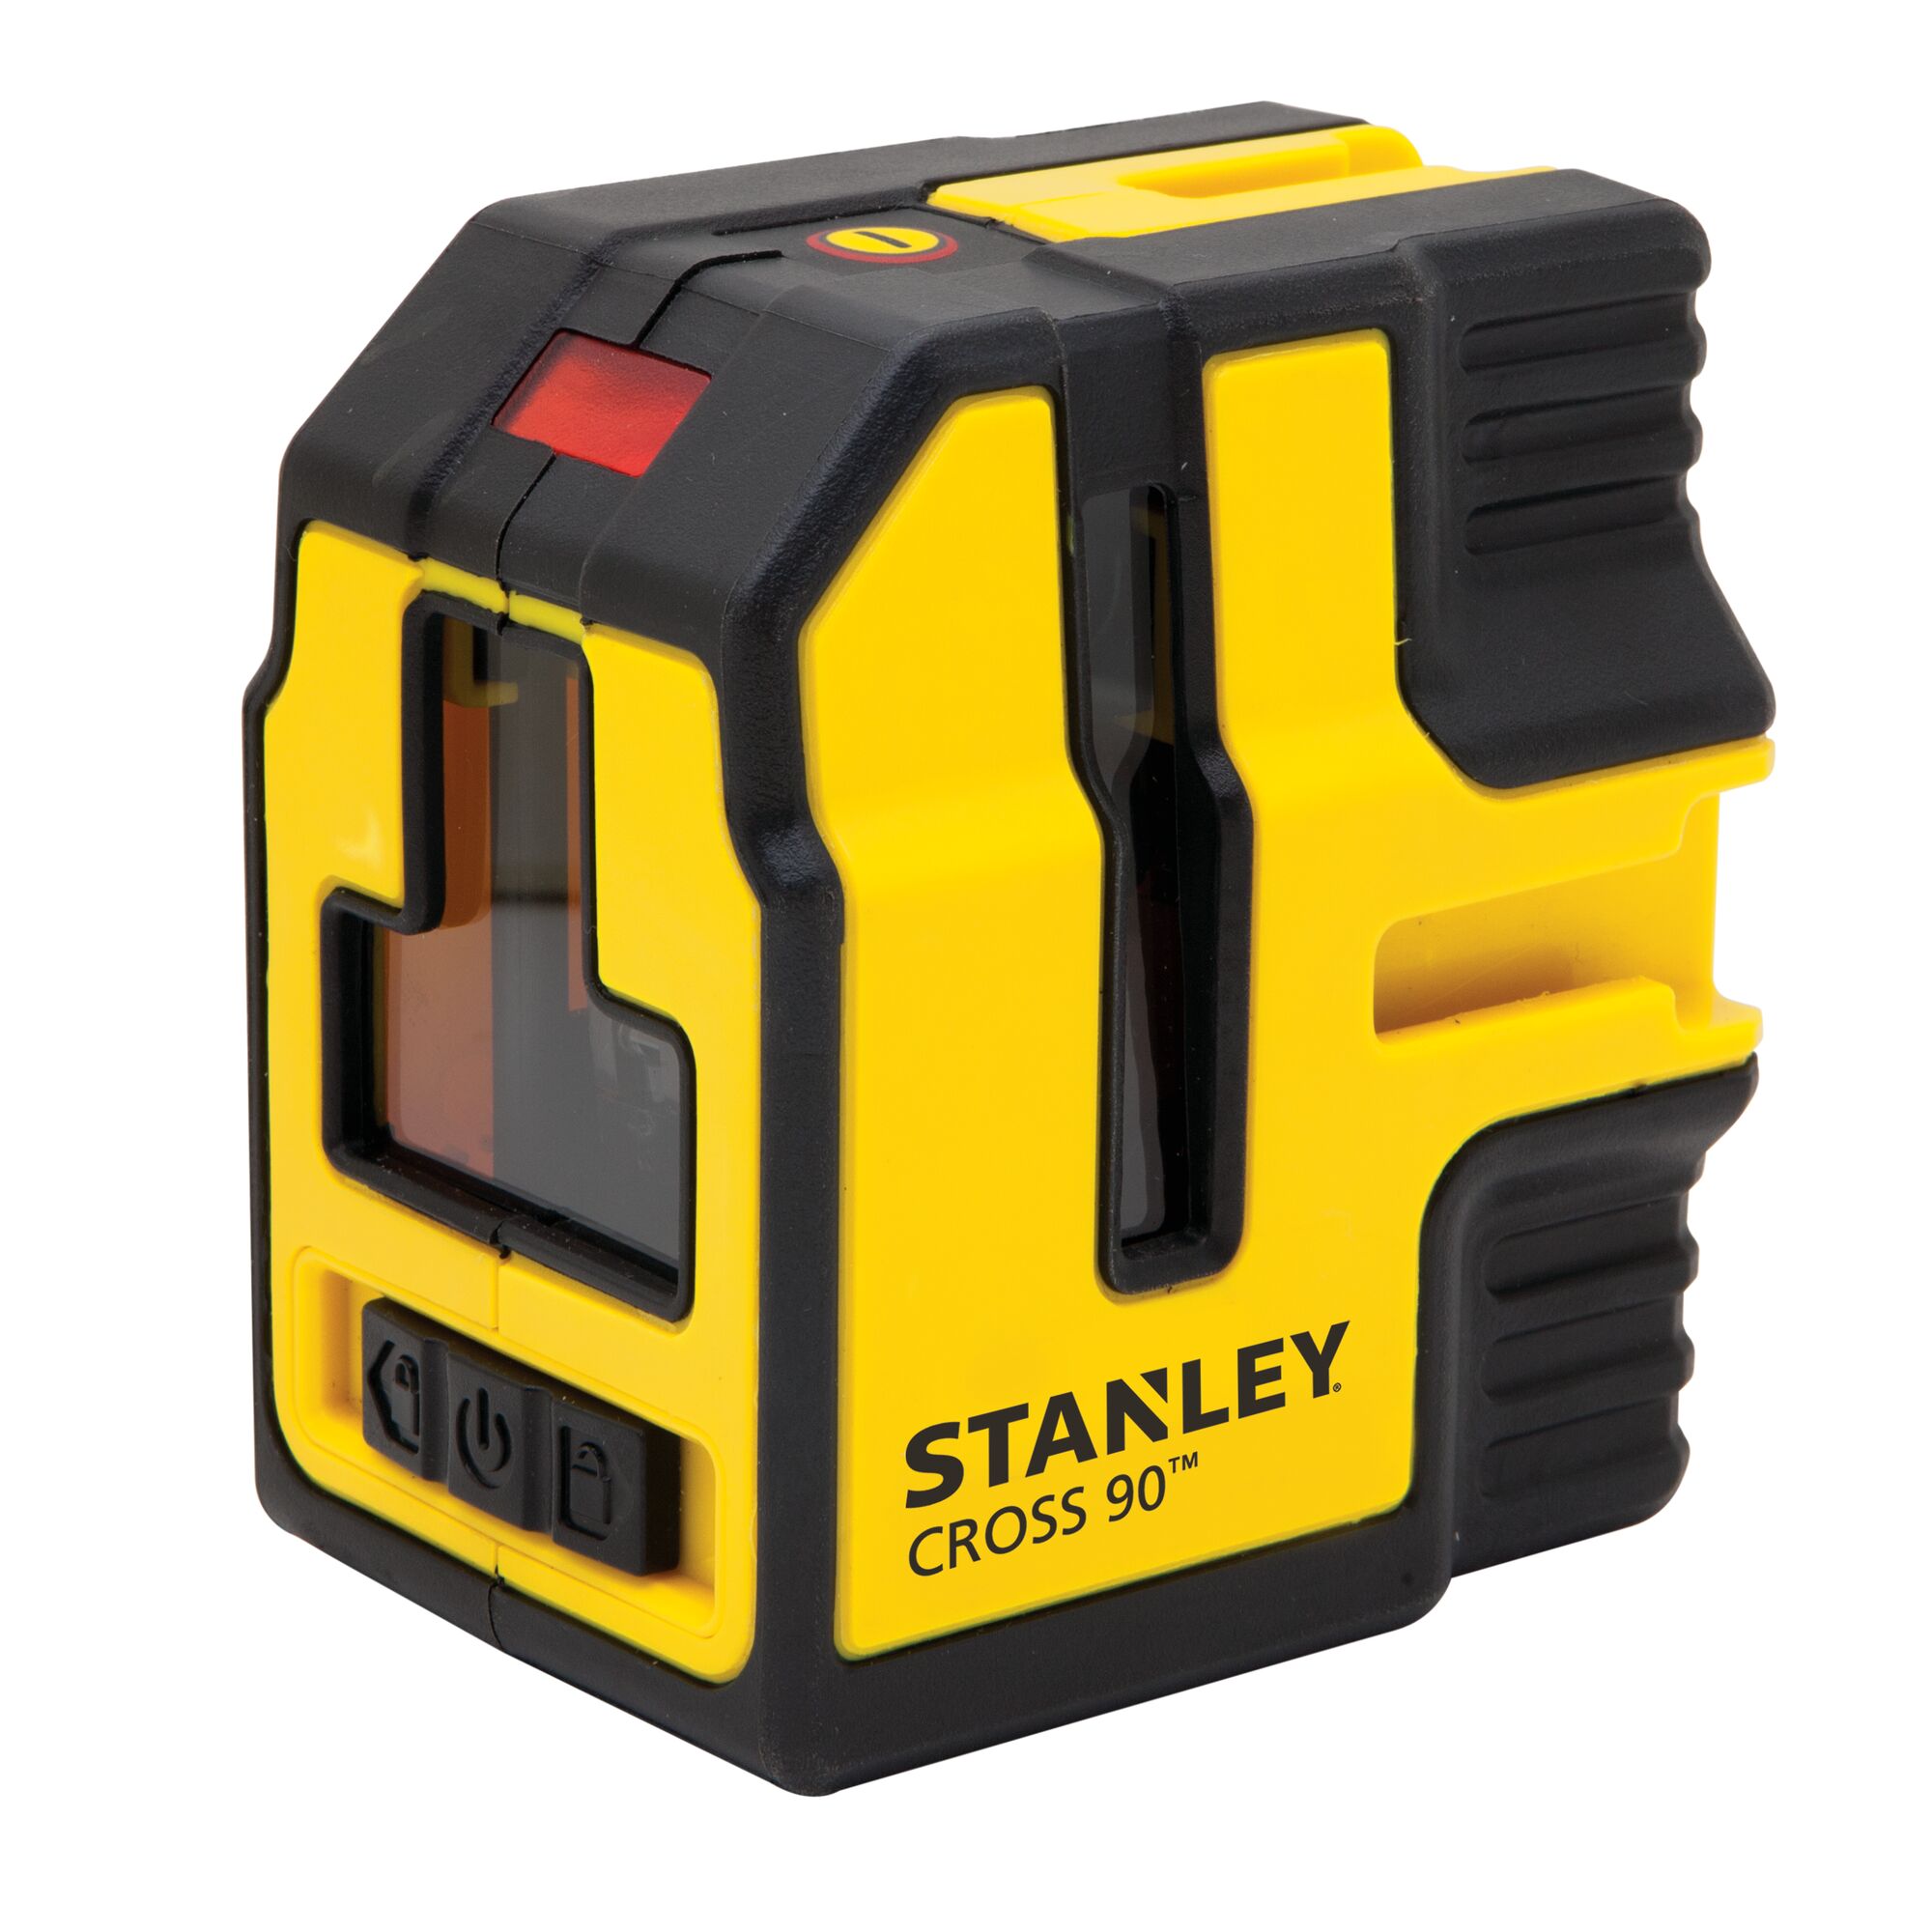 Image of Stanley Cross 90 laser level